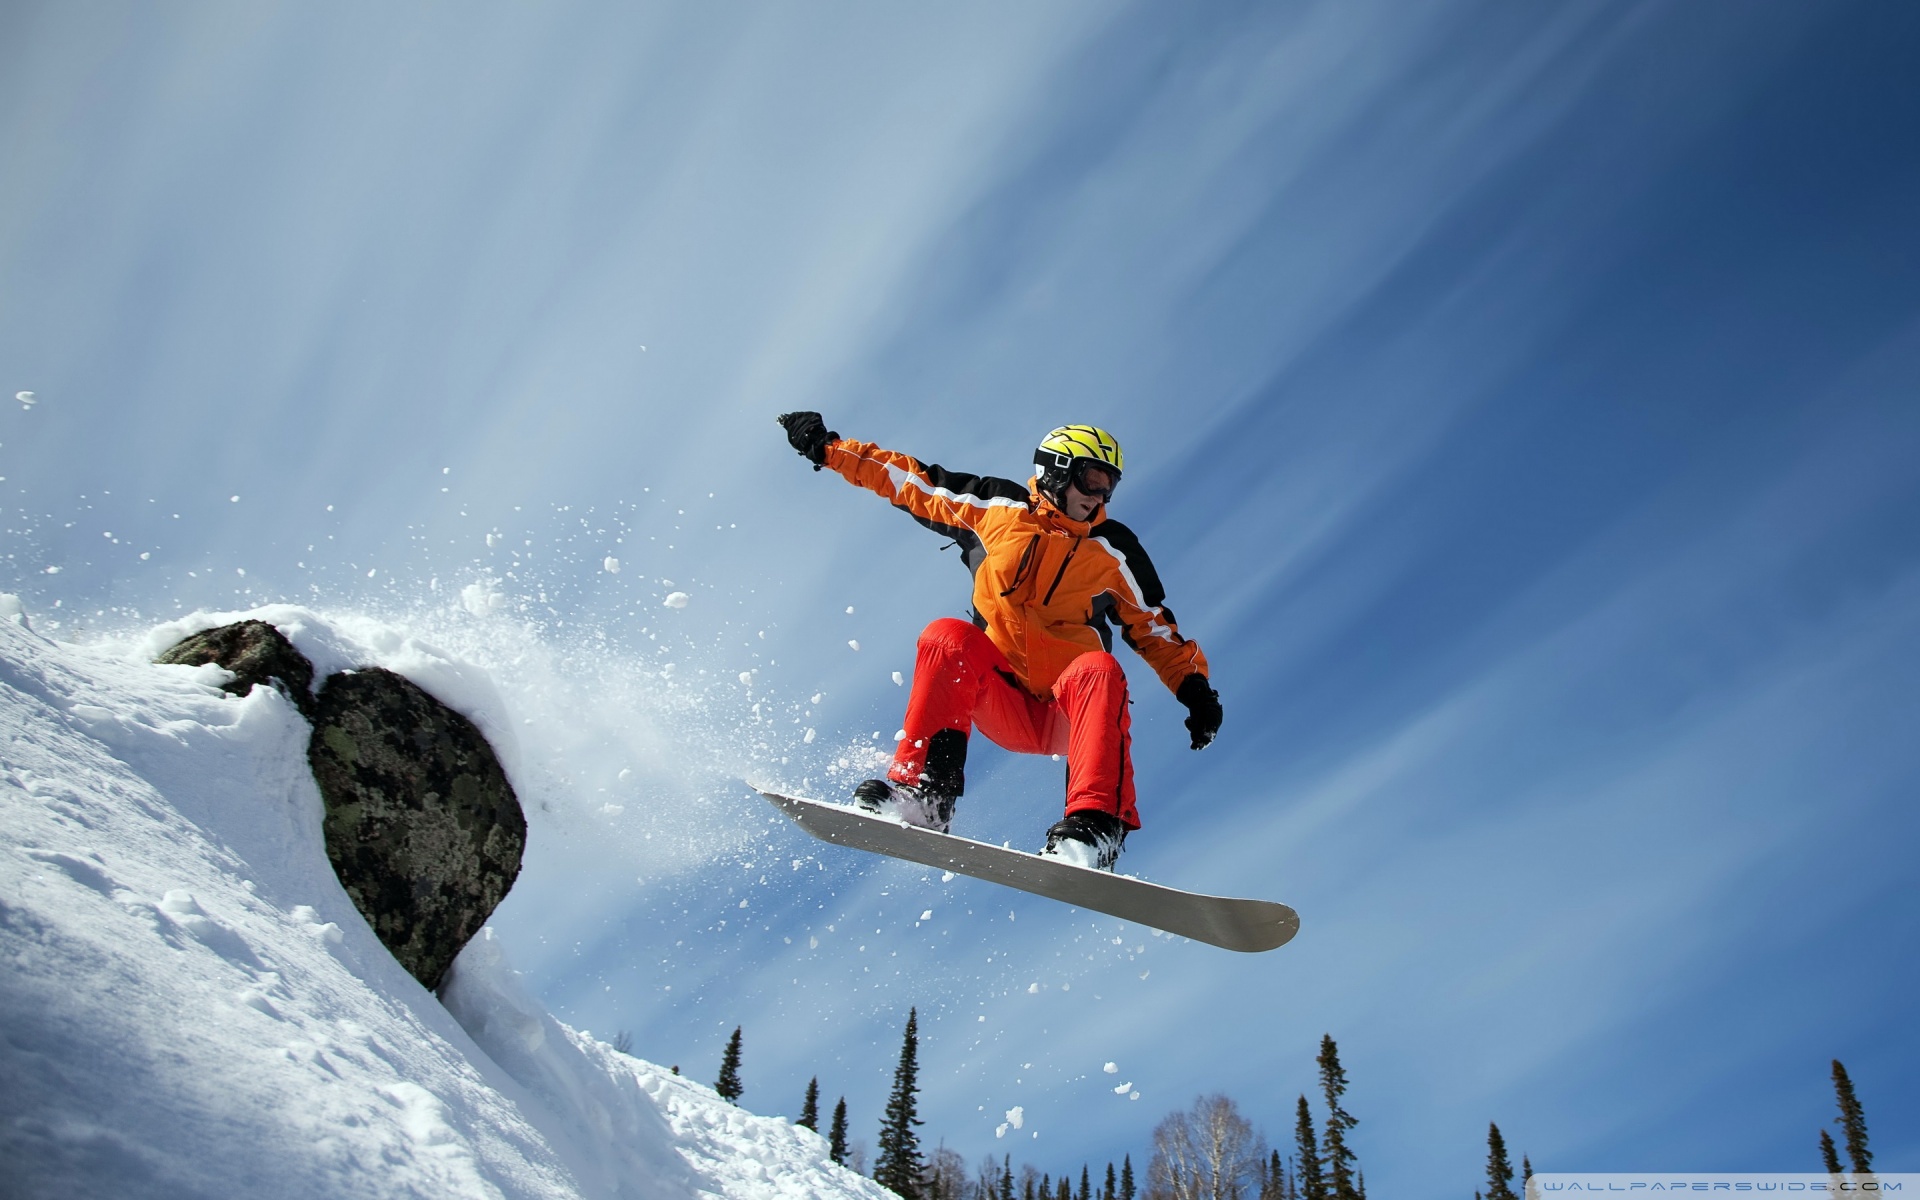 Photos of winter: snowboarder